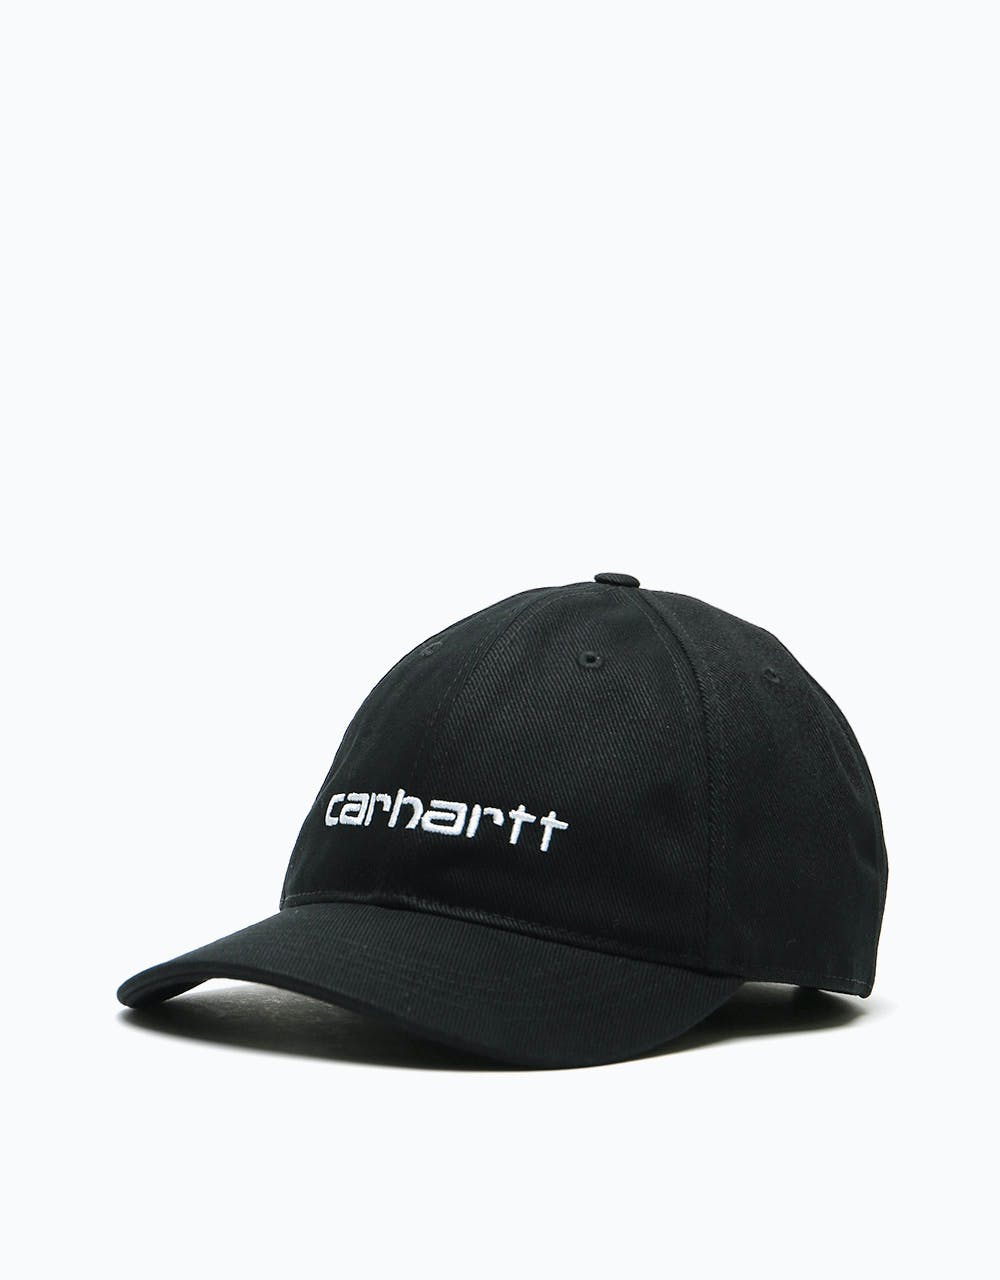 Carhartt WIP Carter Strapback Cap - Black/White